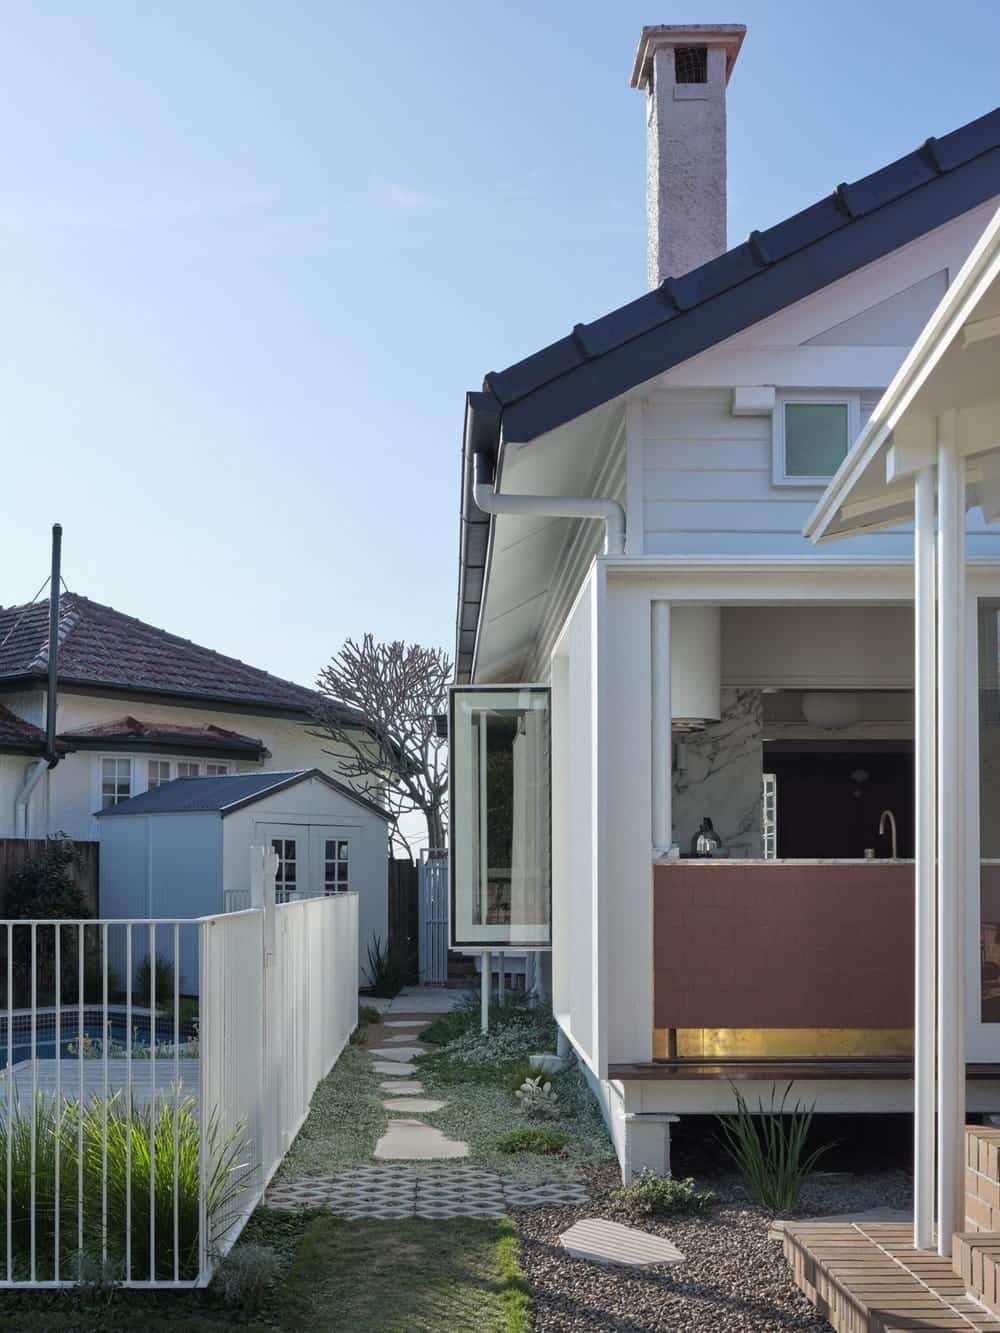 Surrey Hill Garden Terrace / Kieron Gait Architects